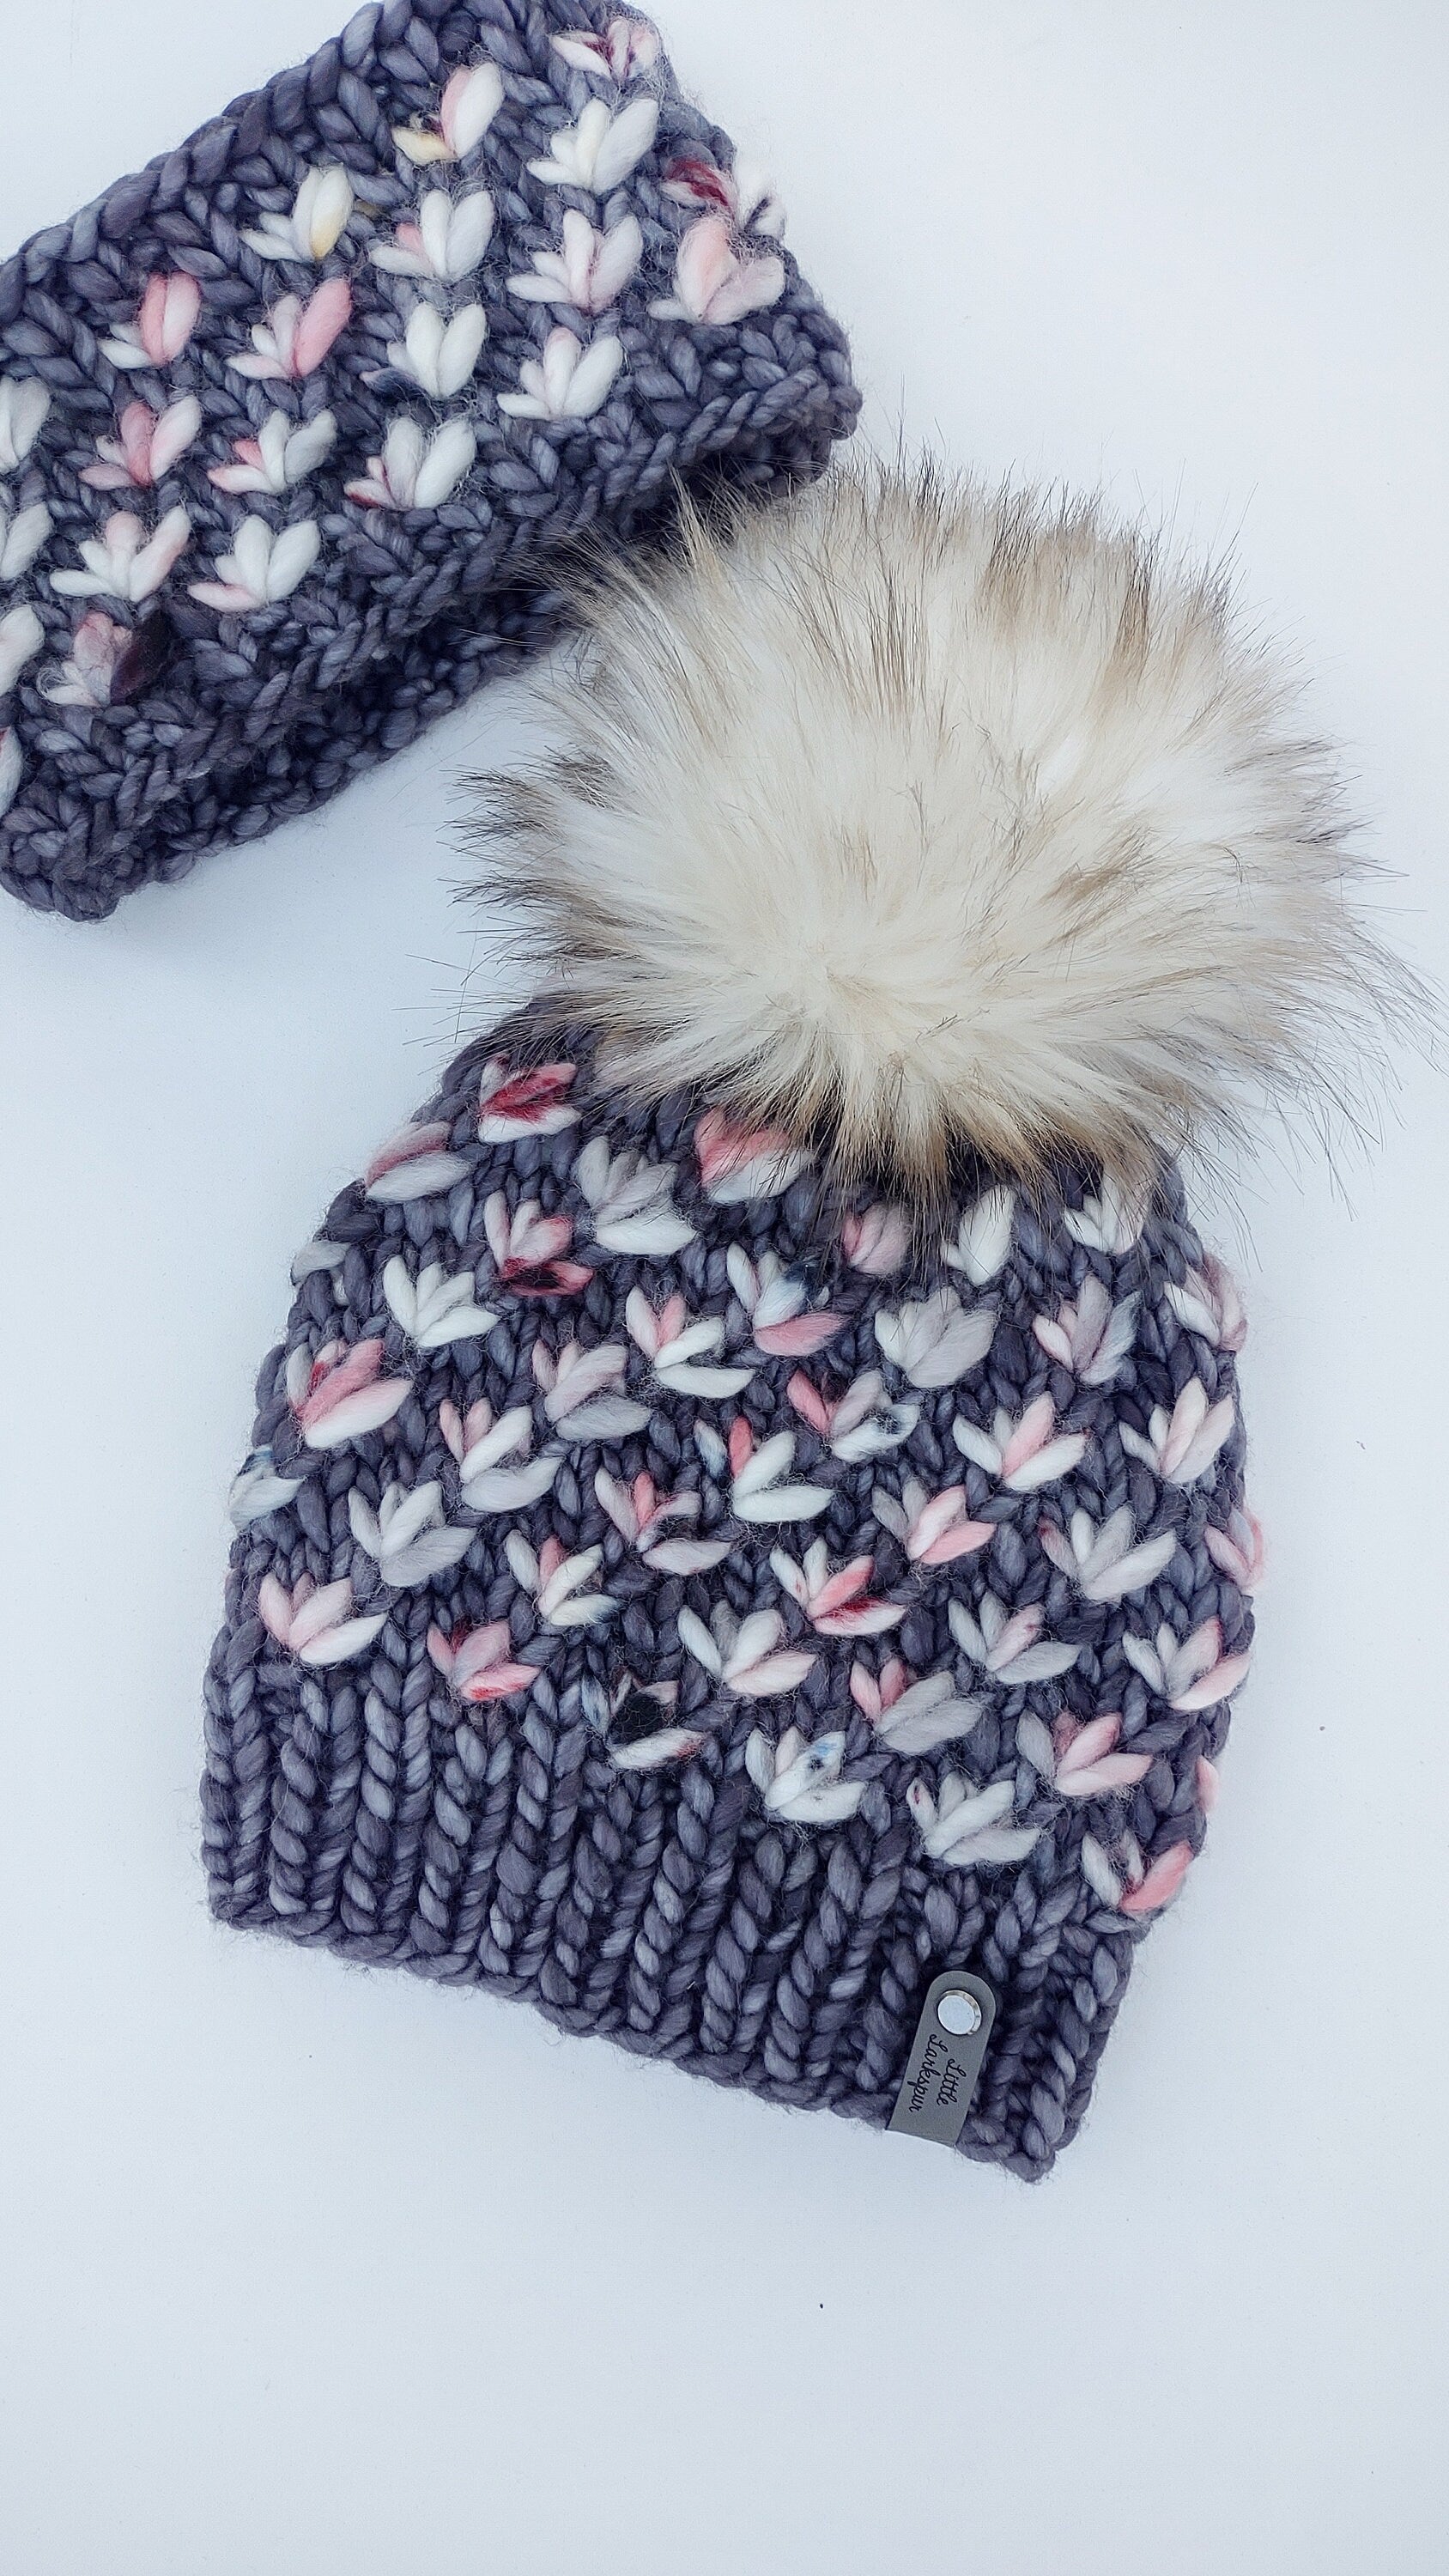 Handknit Adult Hat w/ Faux Fur Pom. 100% Merino Wool. Lotus Flower Beanie. Dark Gray, Pinks, Blush Super Soft Winter Hat. Ready to ship.